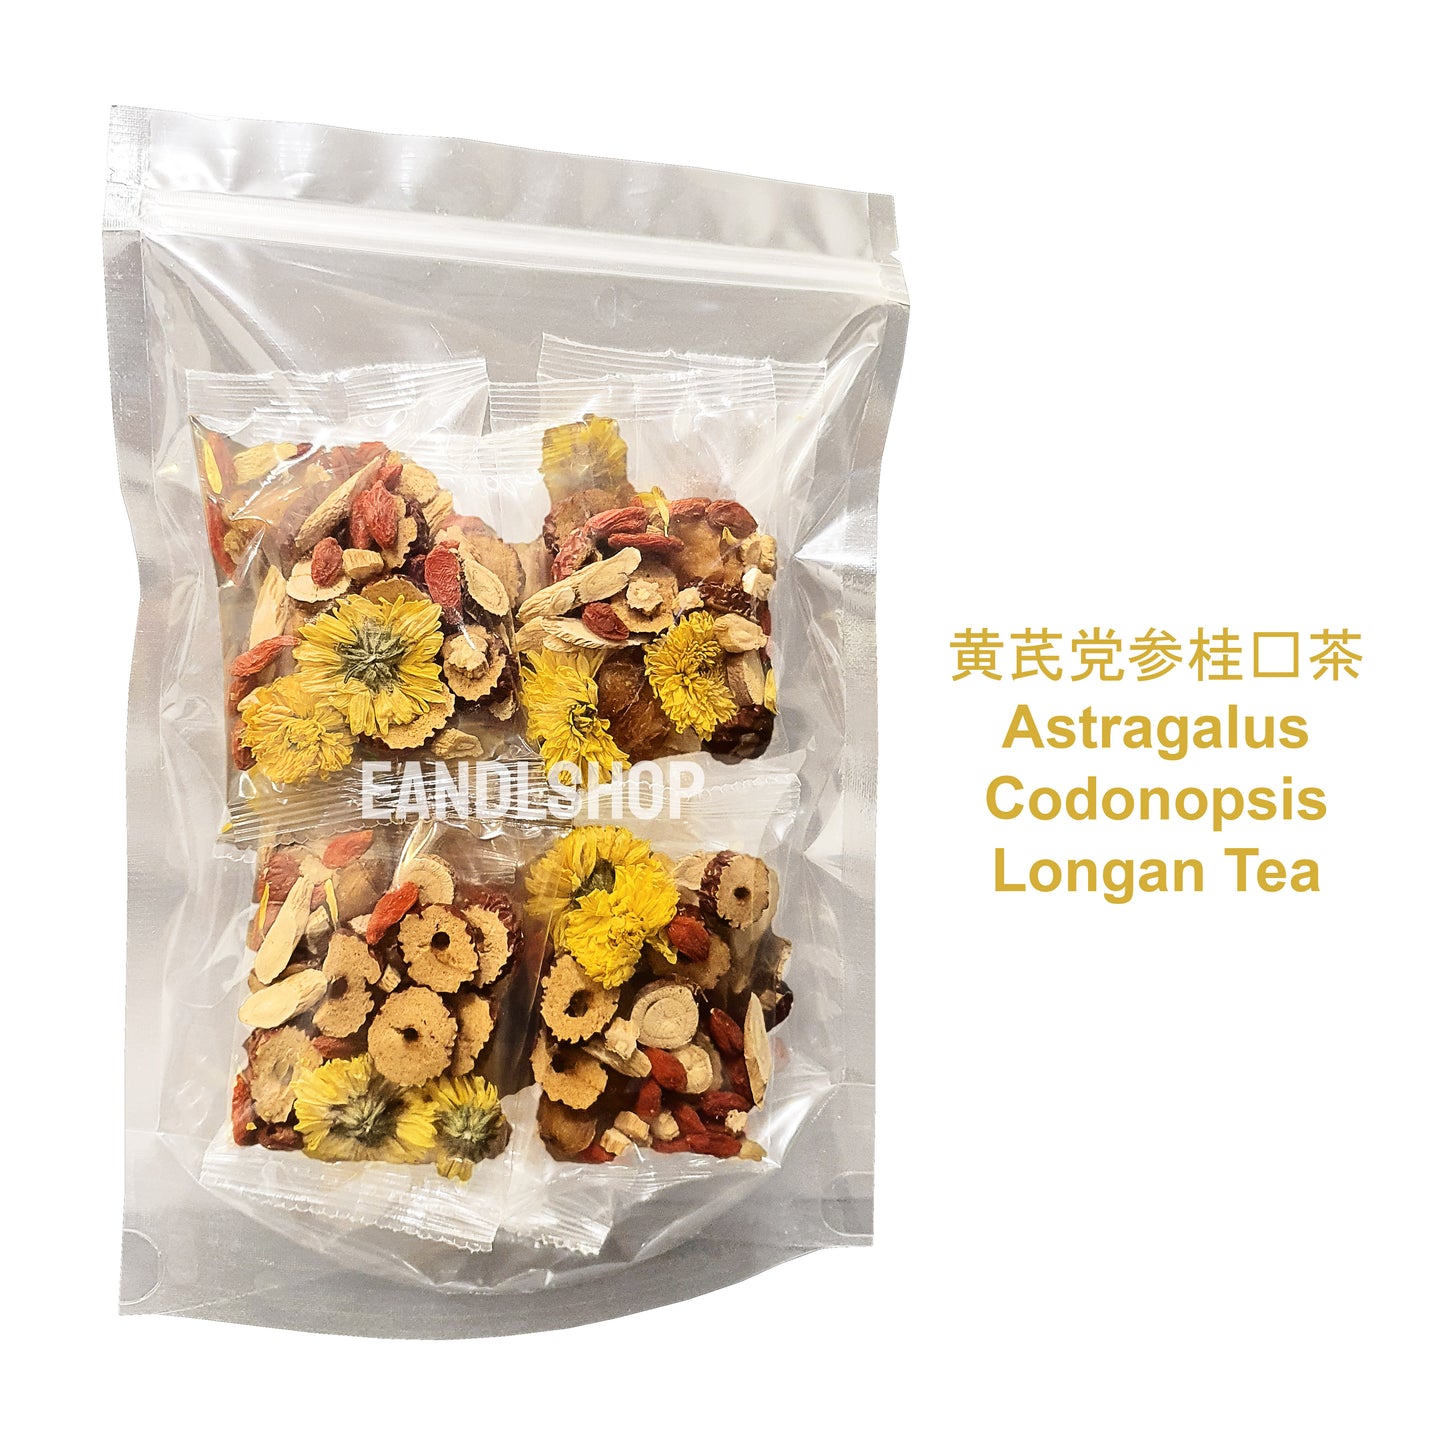 Astragalus Codonopsis Longan Tea. Old-school biscuits, modern snacks (chips, crackers), cakes, gummies, plums, dried fruits, nuts, herbal tea – available at www.EANDLSHOP.com